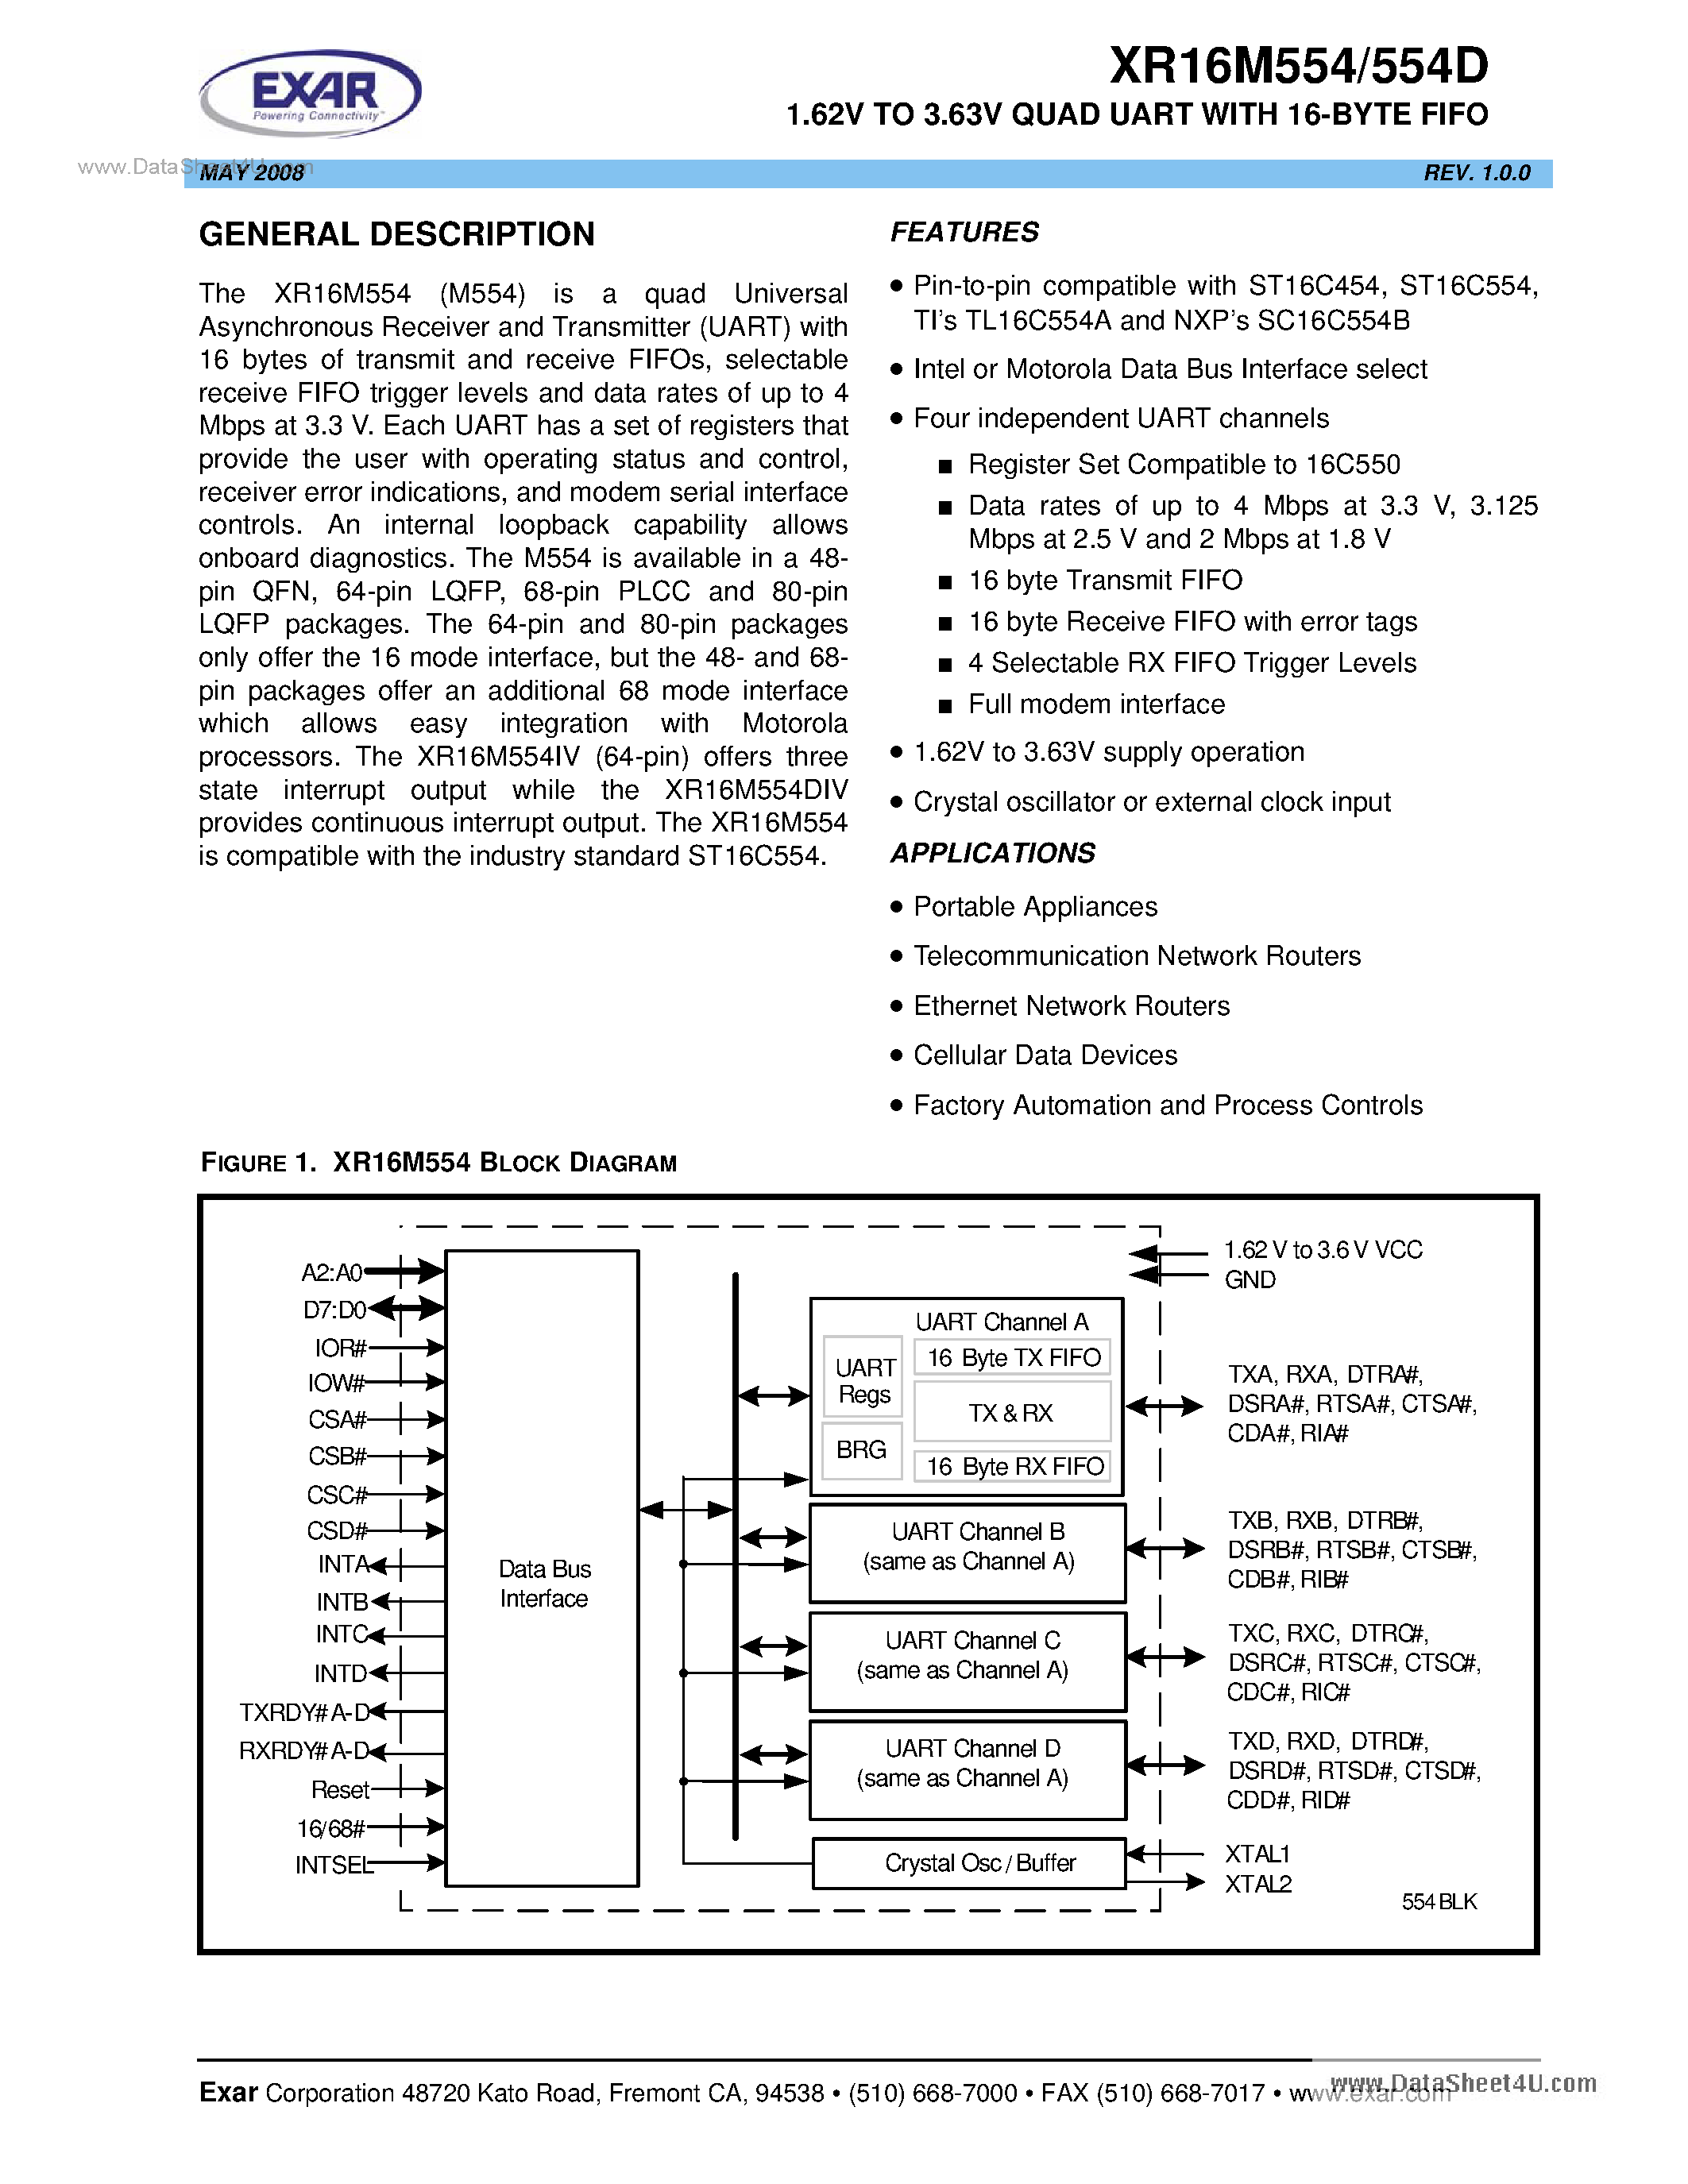 Datasheet XR16M554 - 1.62V To 3.63V Quad UART page 1